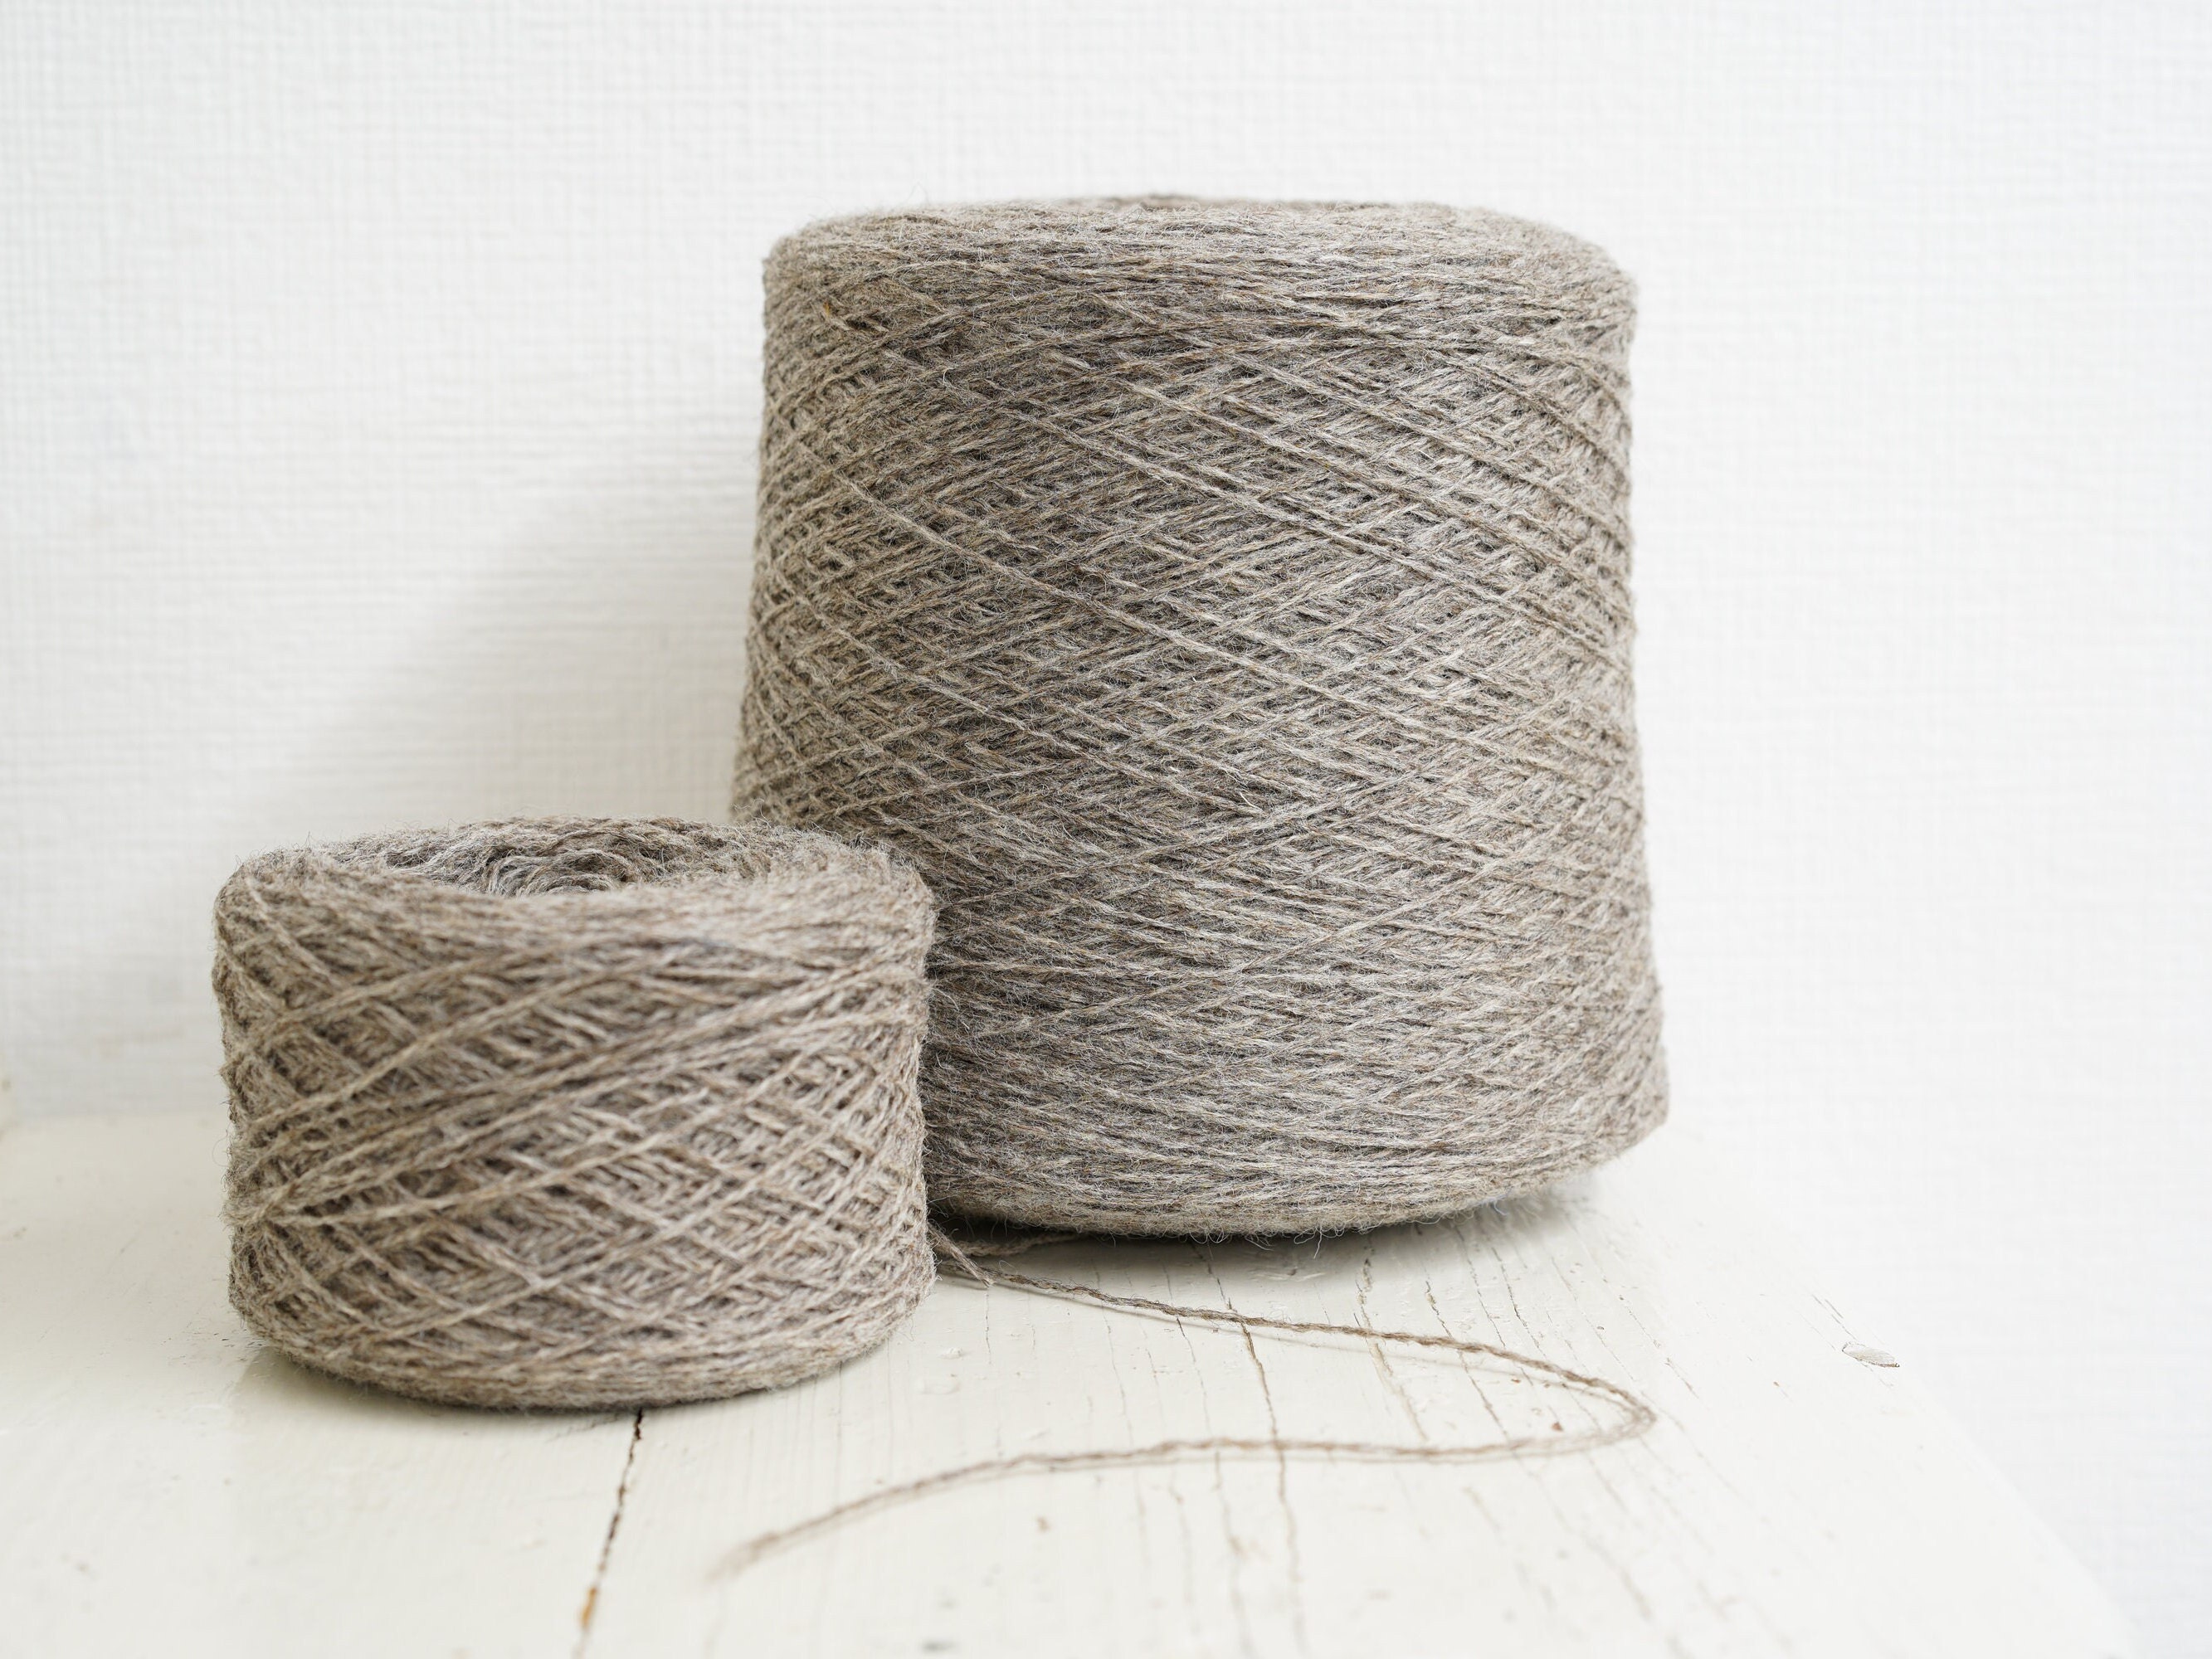 Royal Blue Wool Yarn 100g./3,50 Oz. New Zealand Wool for Hand or